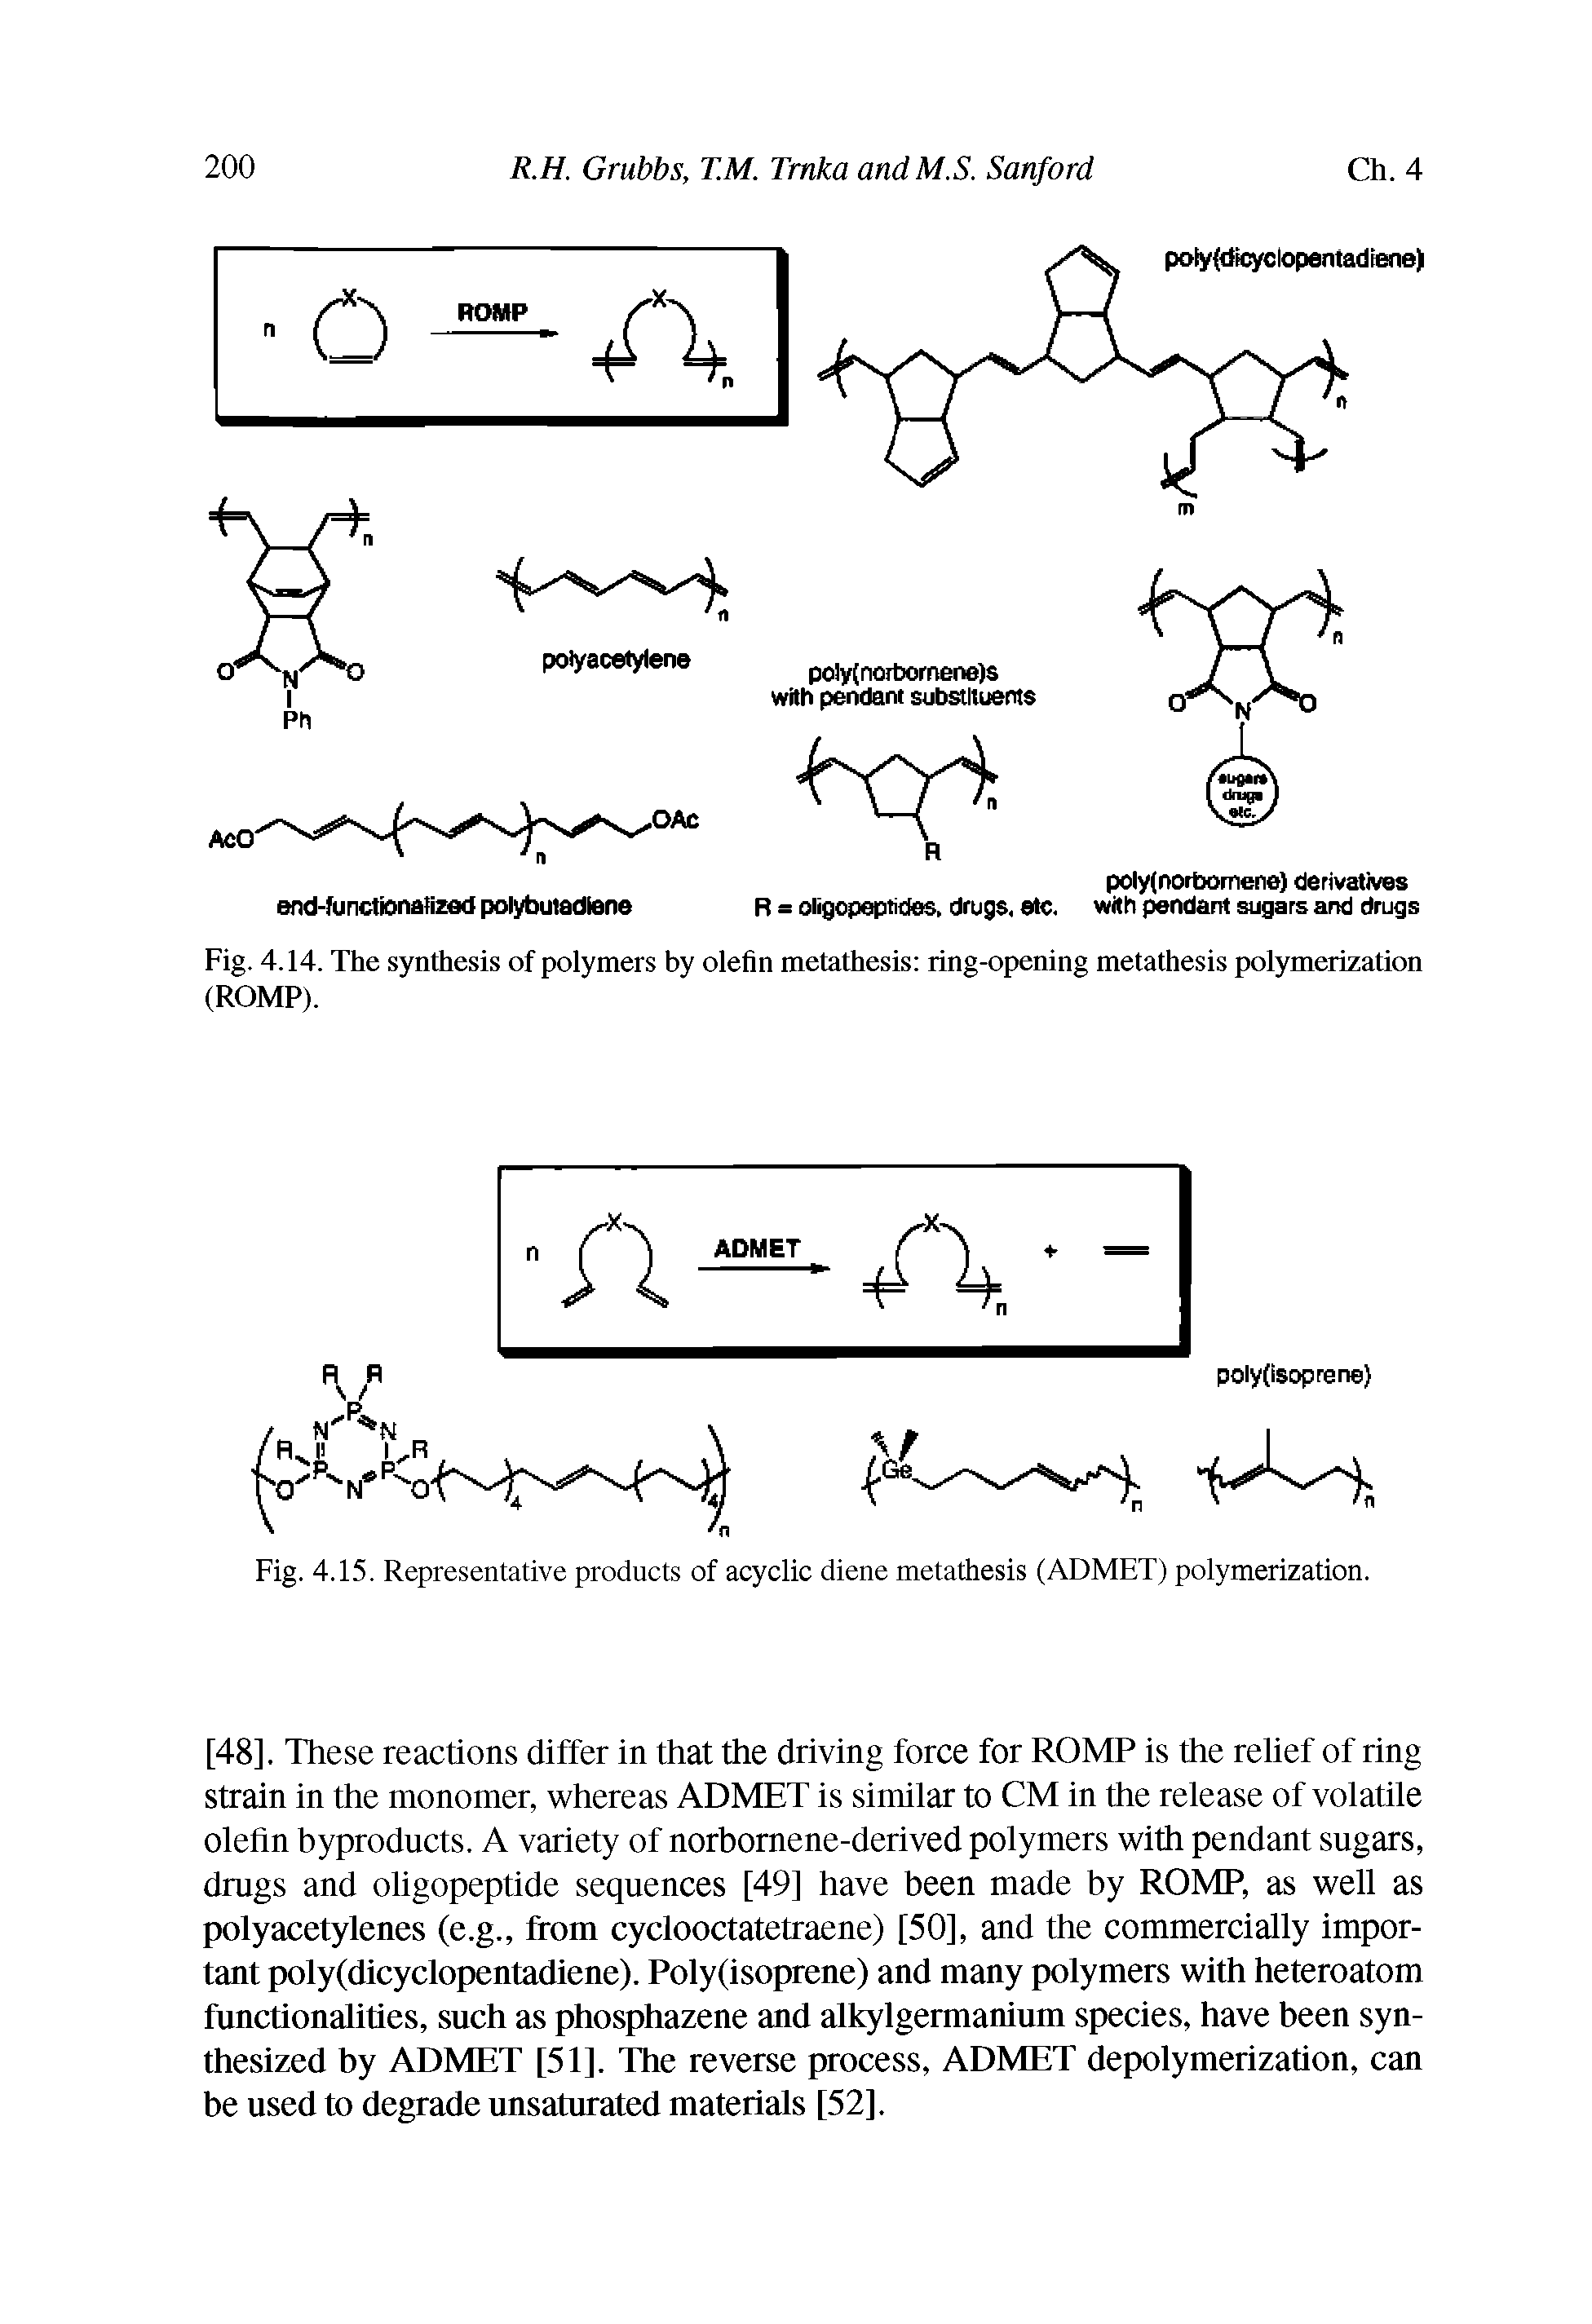 Fig. 4.15. Representative products of acyclic diene metathesis (ADMET) polymerization.